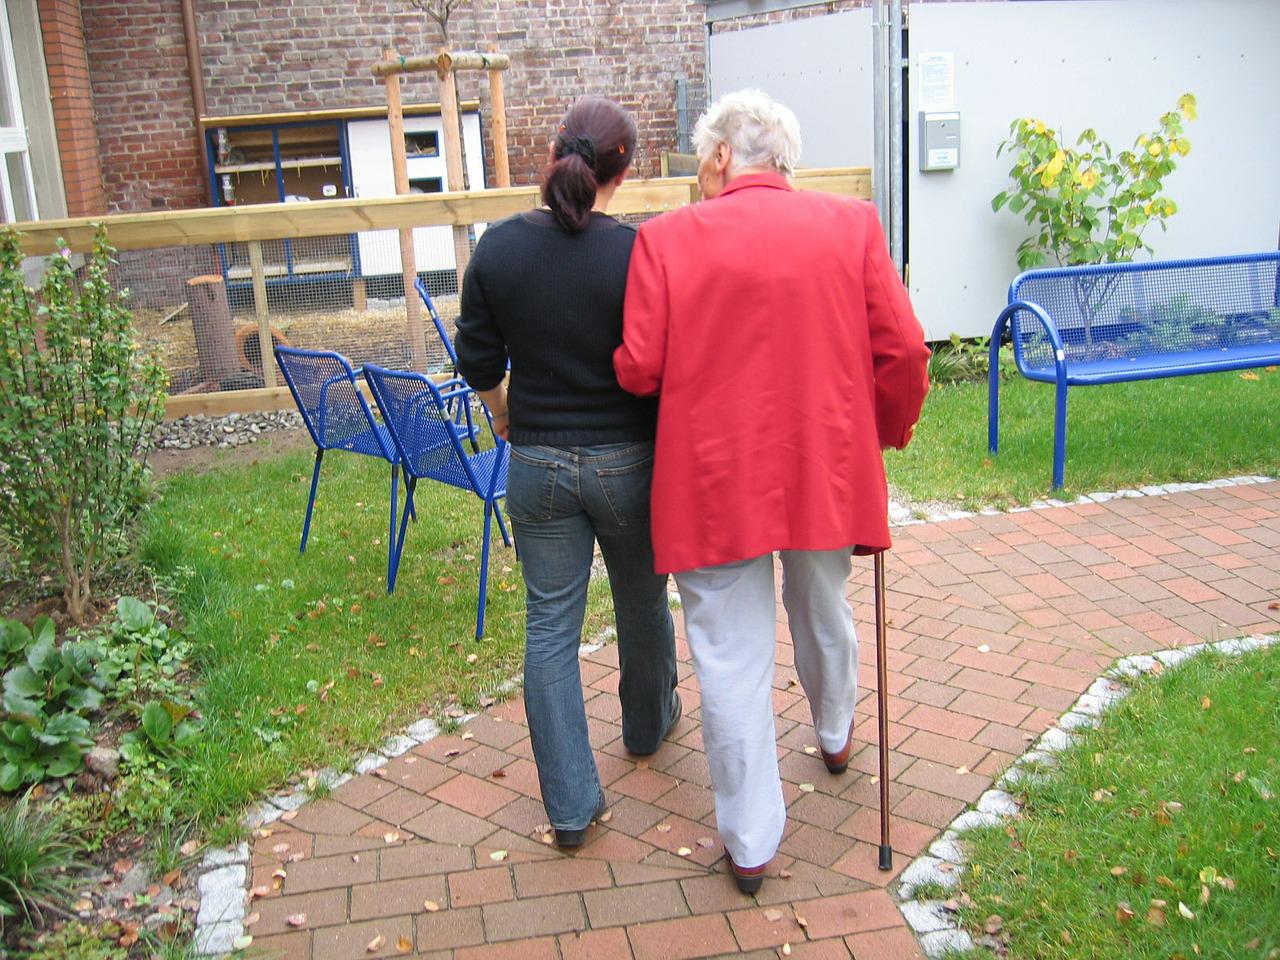 Pflege Seniorenbetreuung.jpg